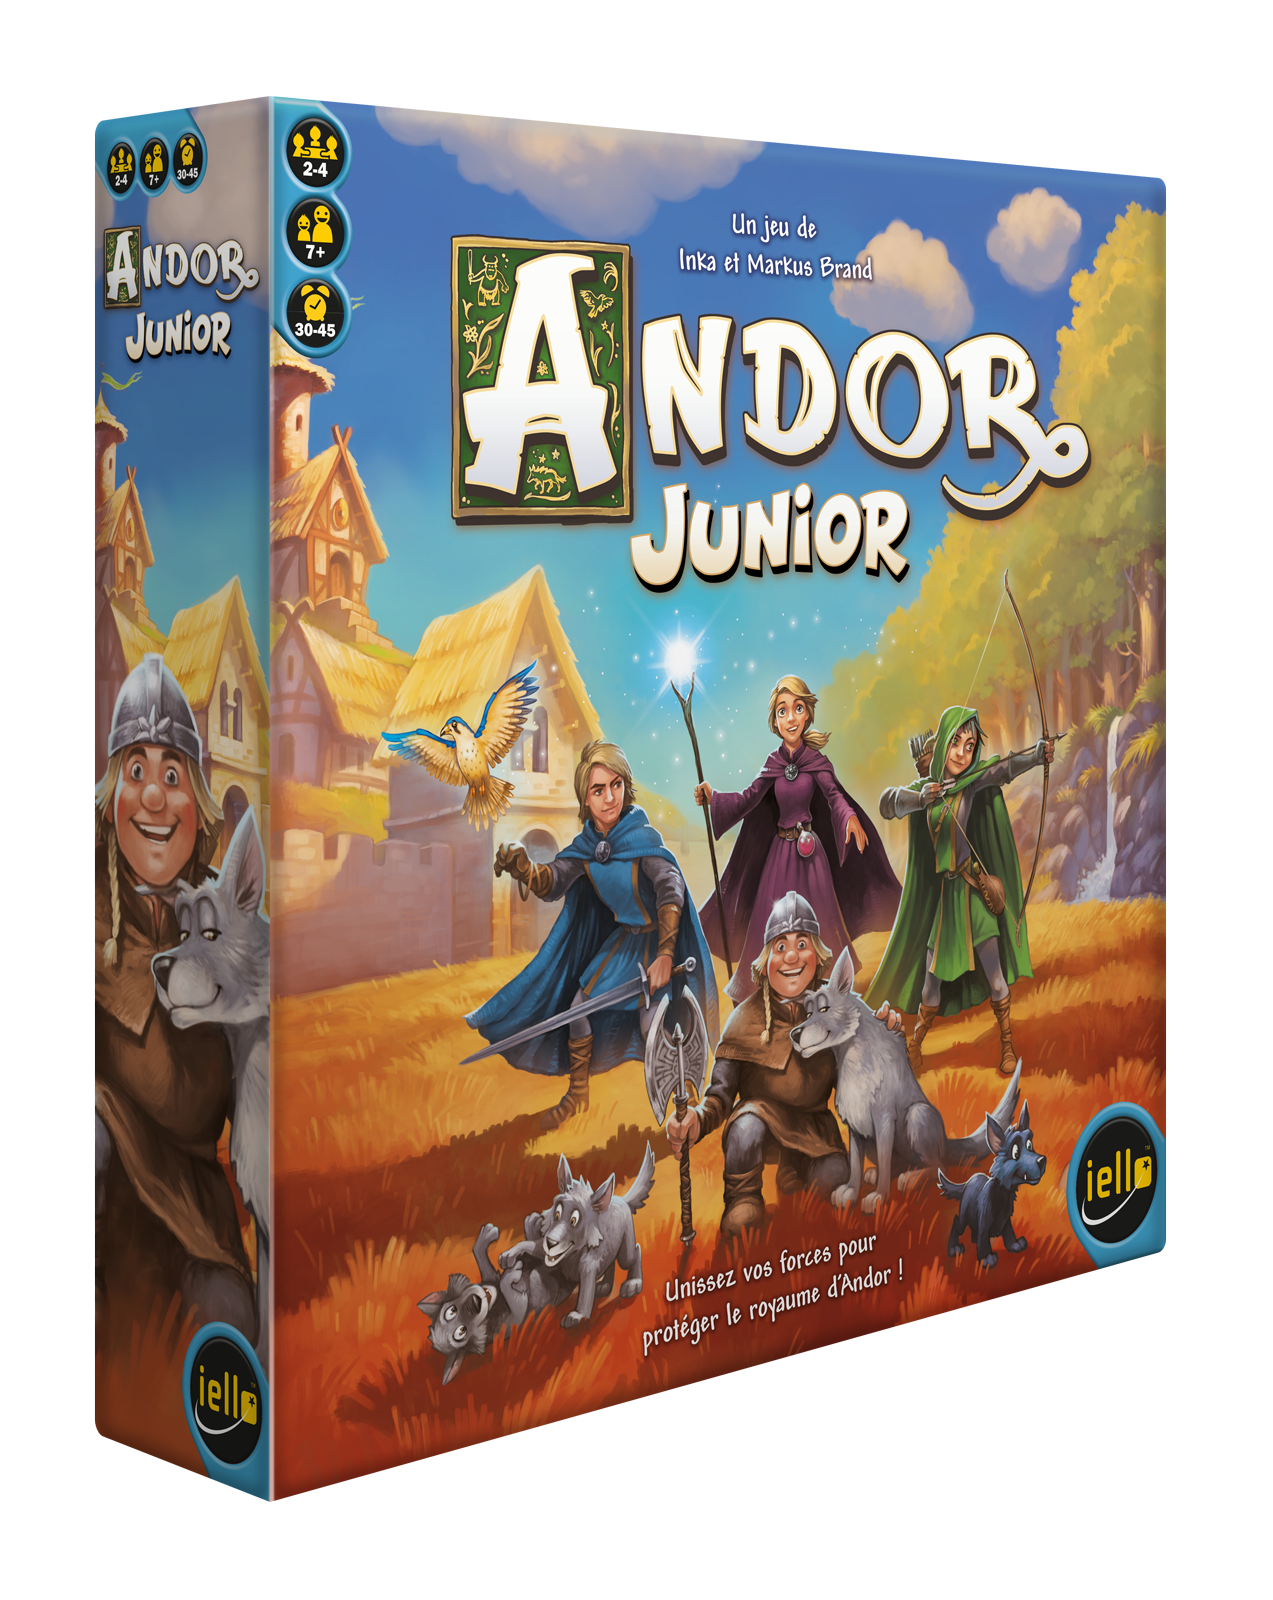 Andor-Junior_Mockup-1